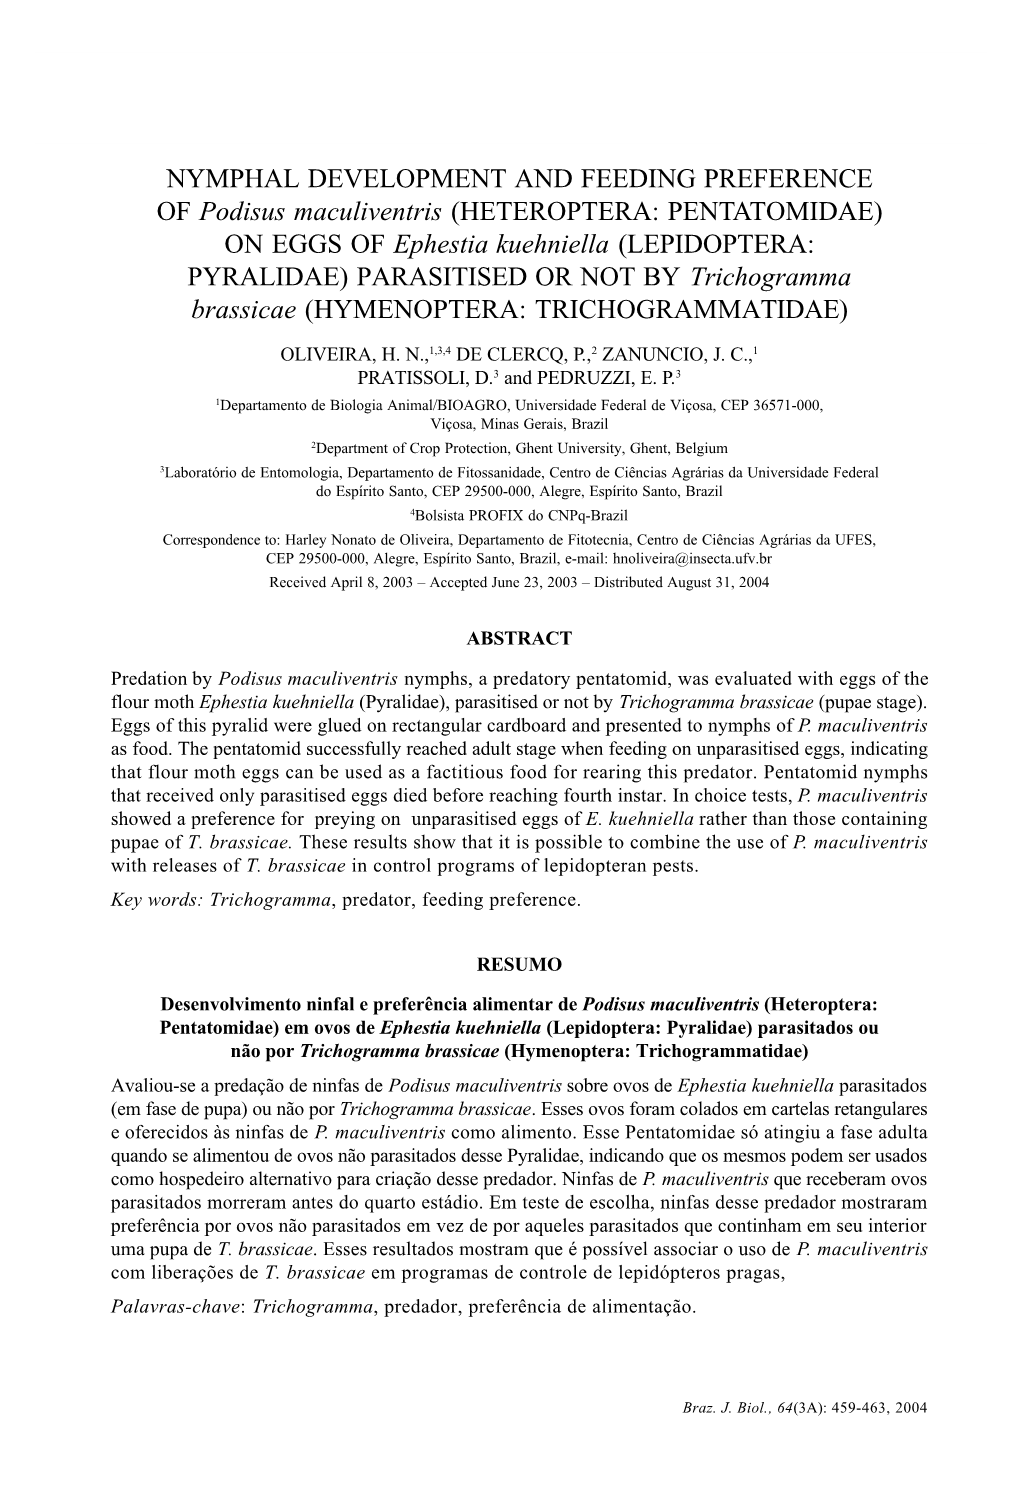 ON EGGS of Ephestia Kuehniella (LEPIDOPTERA: PYRALIDAE) PARASITISED OR NOT by Trichogramma Brassicae (HYMENOPTERA: TRICHOGRAMMATIDAE)